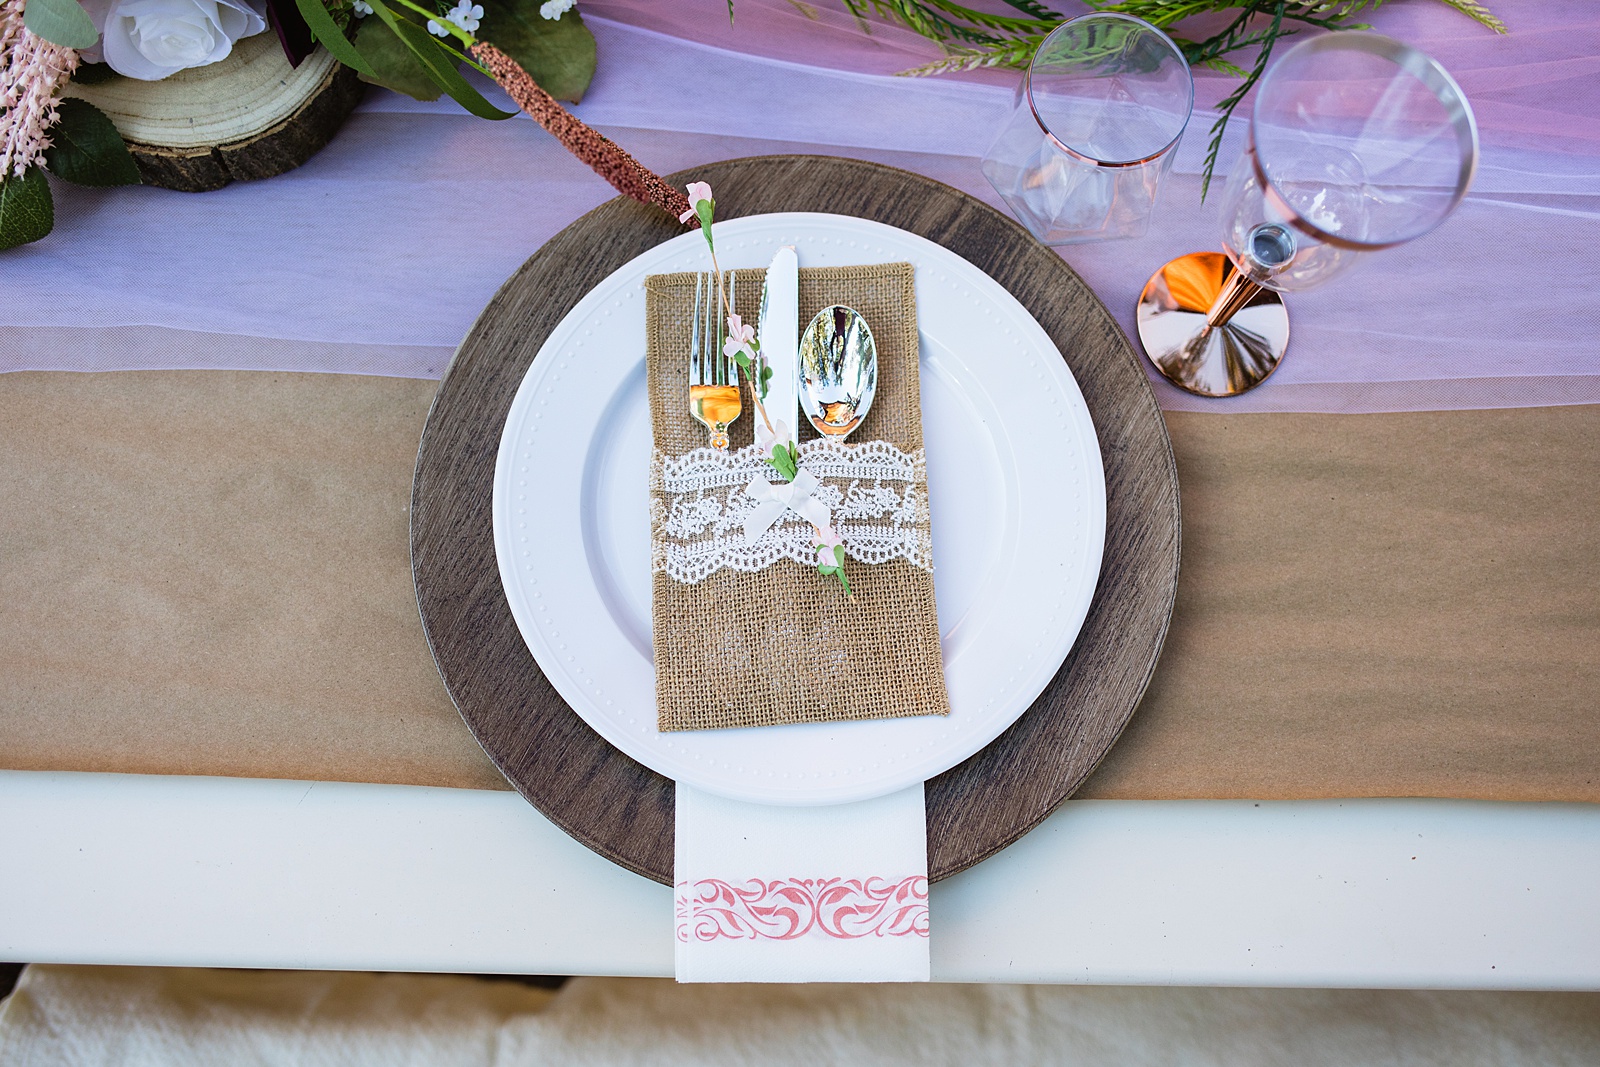 Boho table settings at Mogollon Rim wedding reception by Northern Arizona wedding photographer PMA Photography.